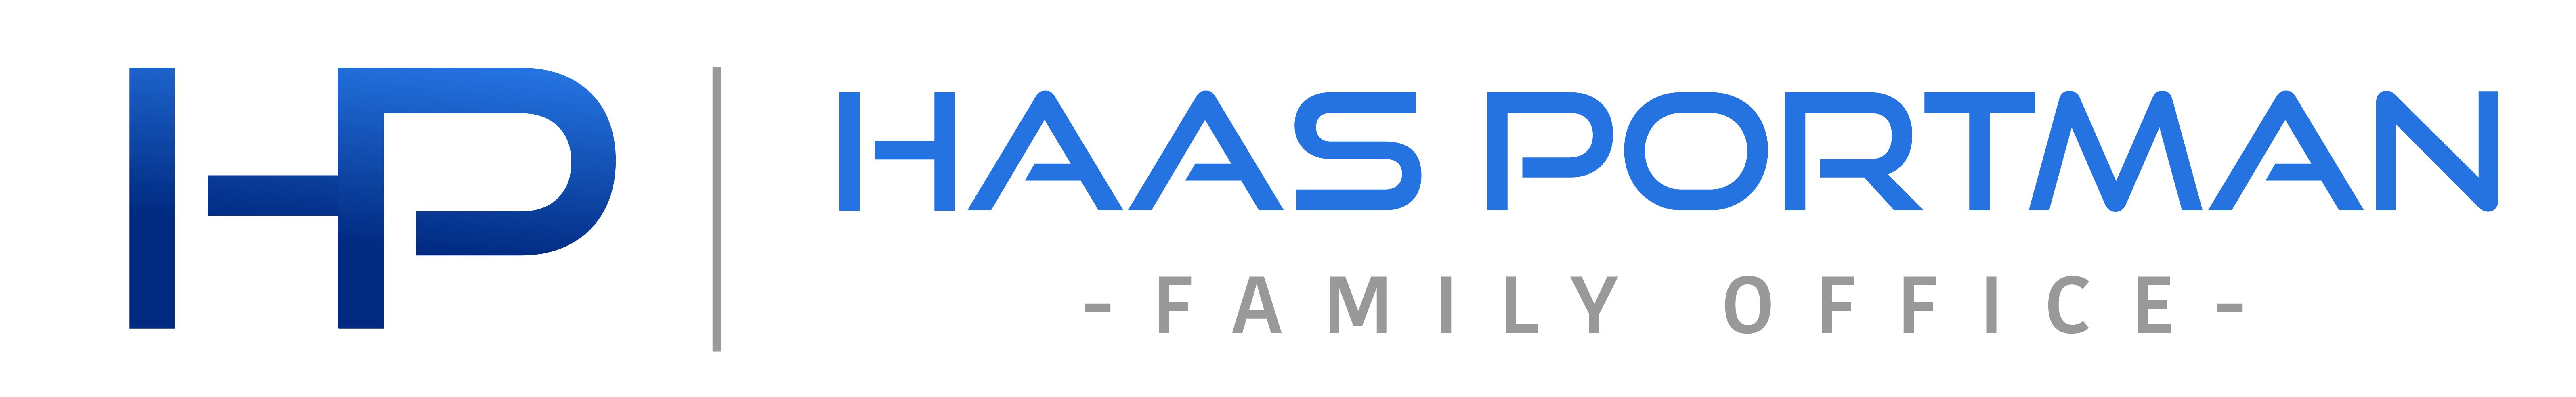 Haas Portmanfamily office logo